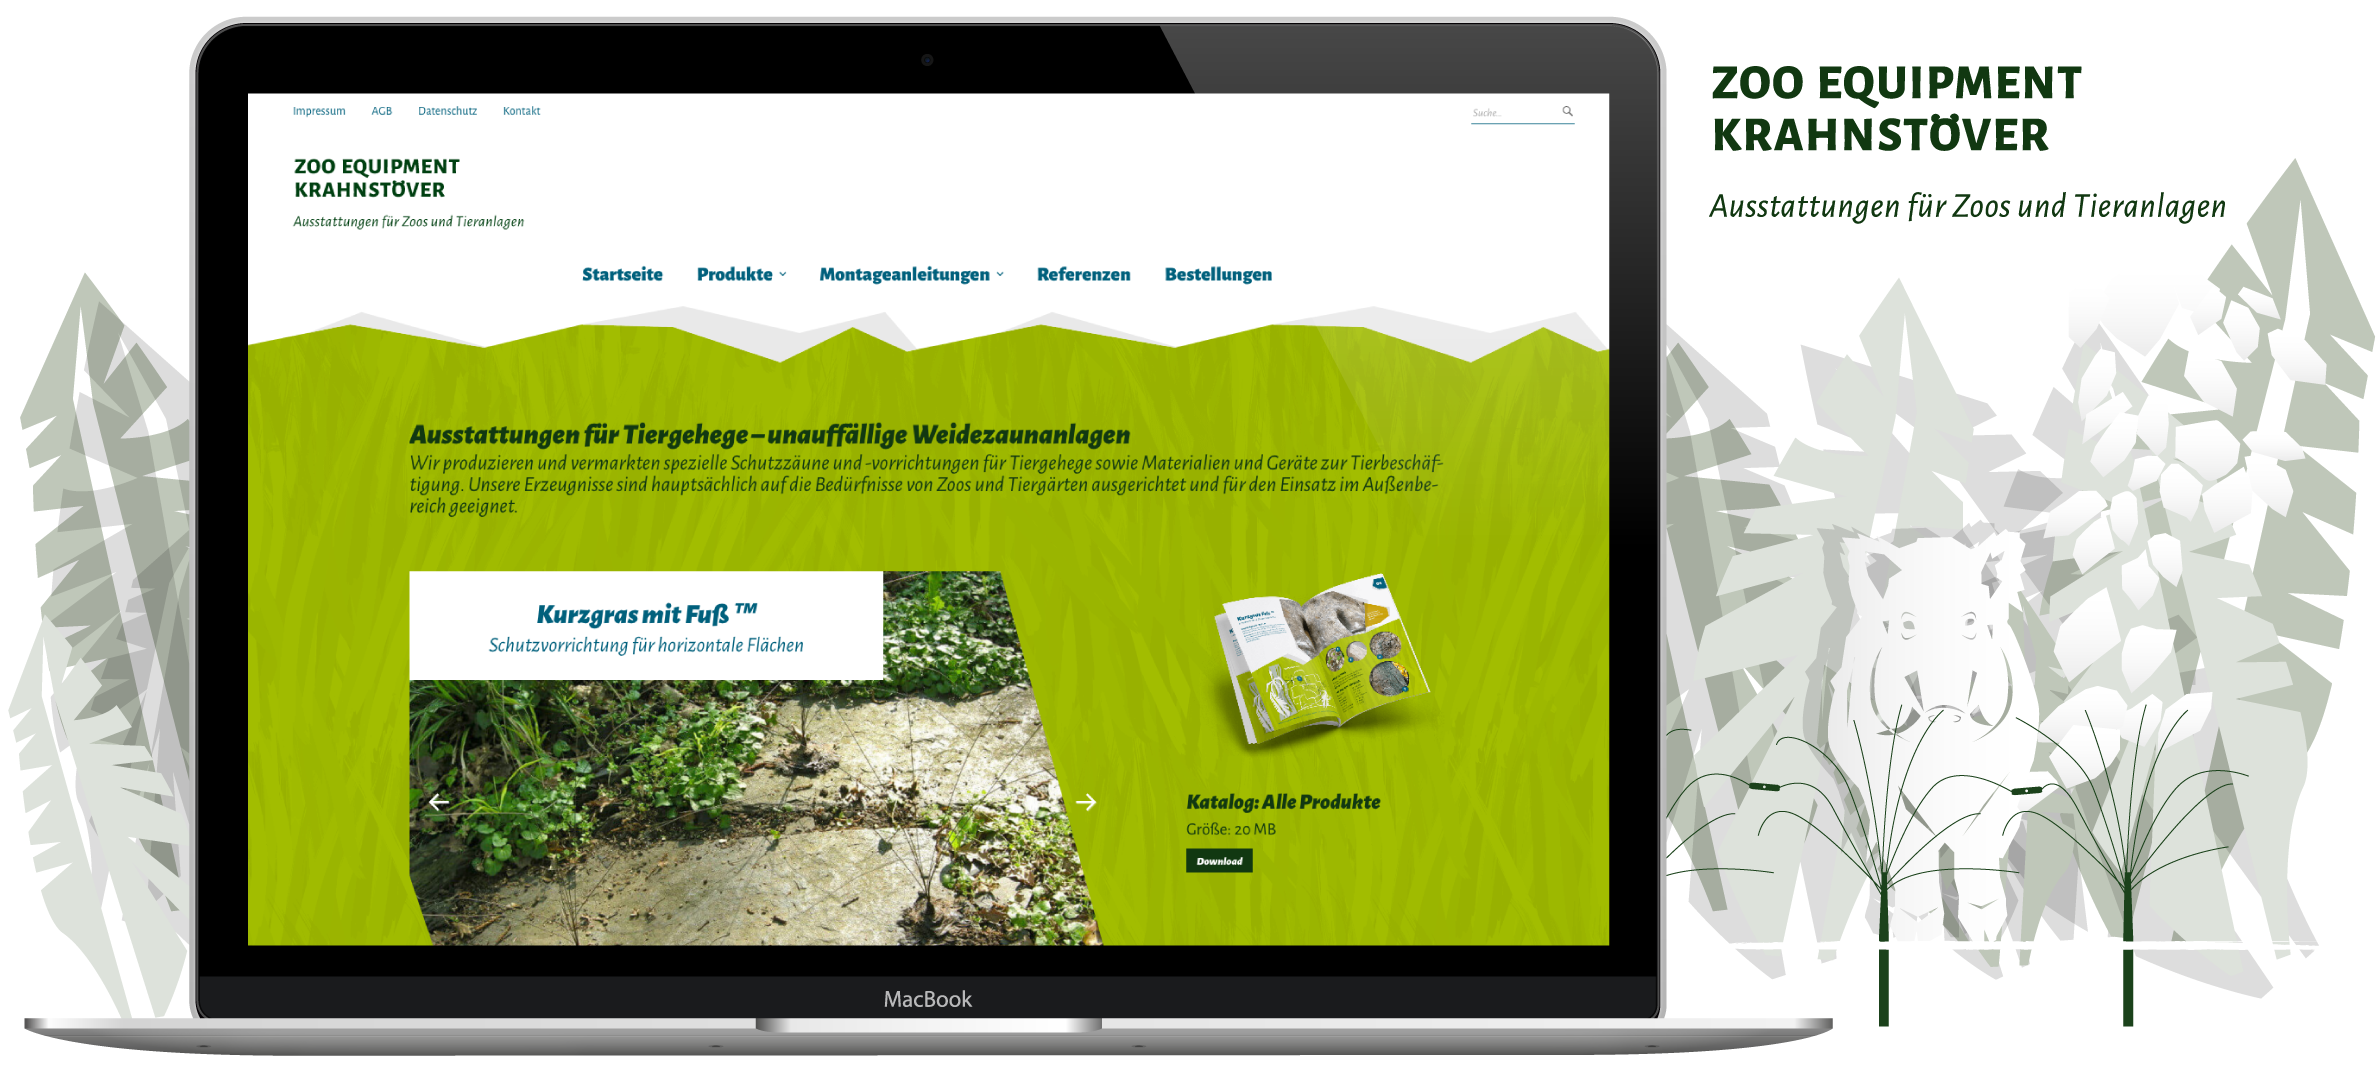 Zooequipment Krahnstöver, News Corporate Design | Webdesign